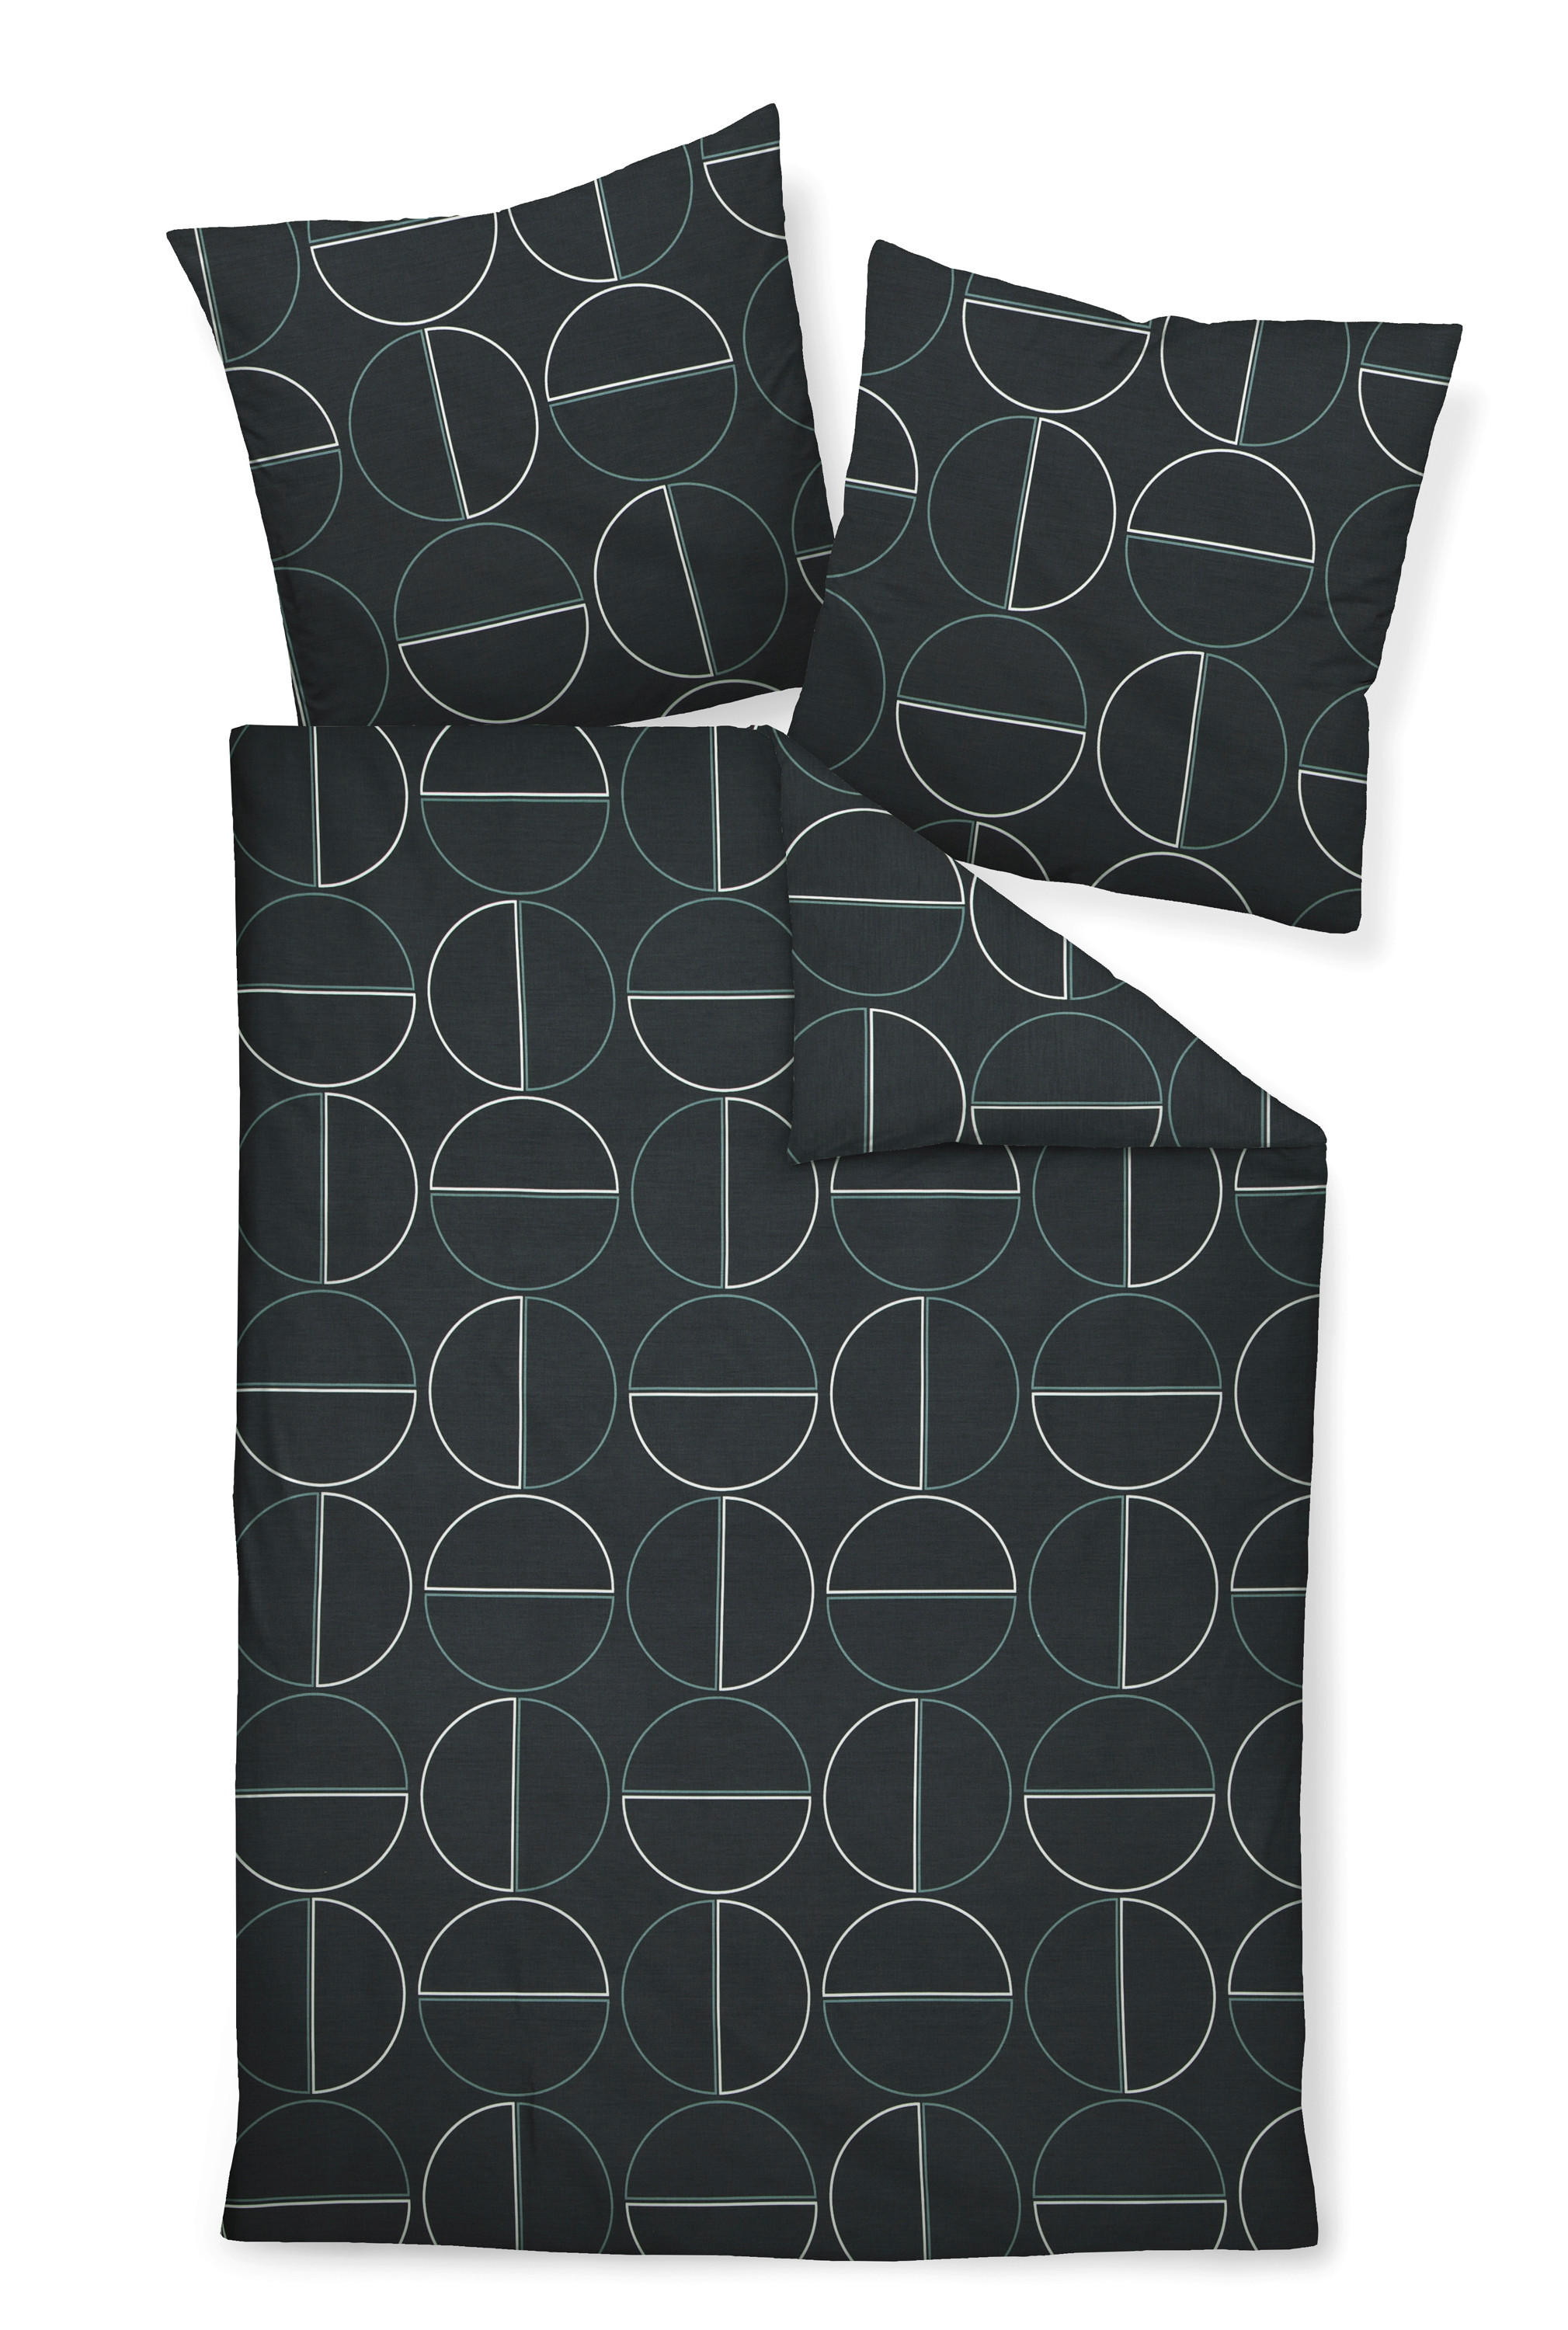 BETTWÄSCHE J.D. Makosatin  - Türkis/Blaugrau, Design, Textil (135/200cm) - Janine